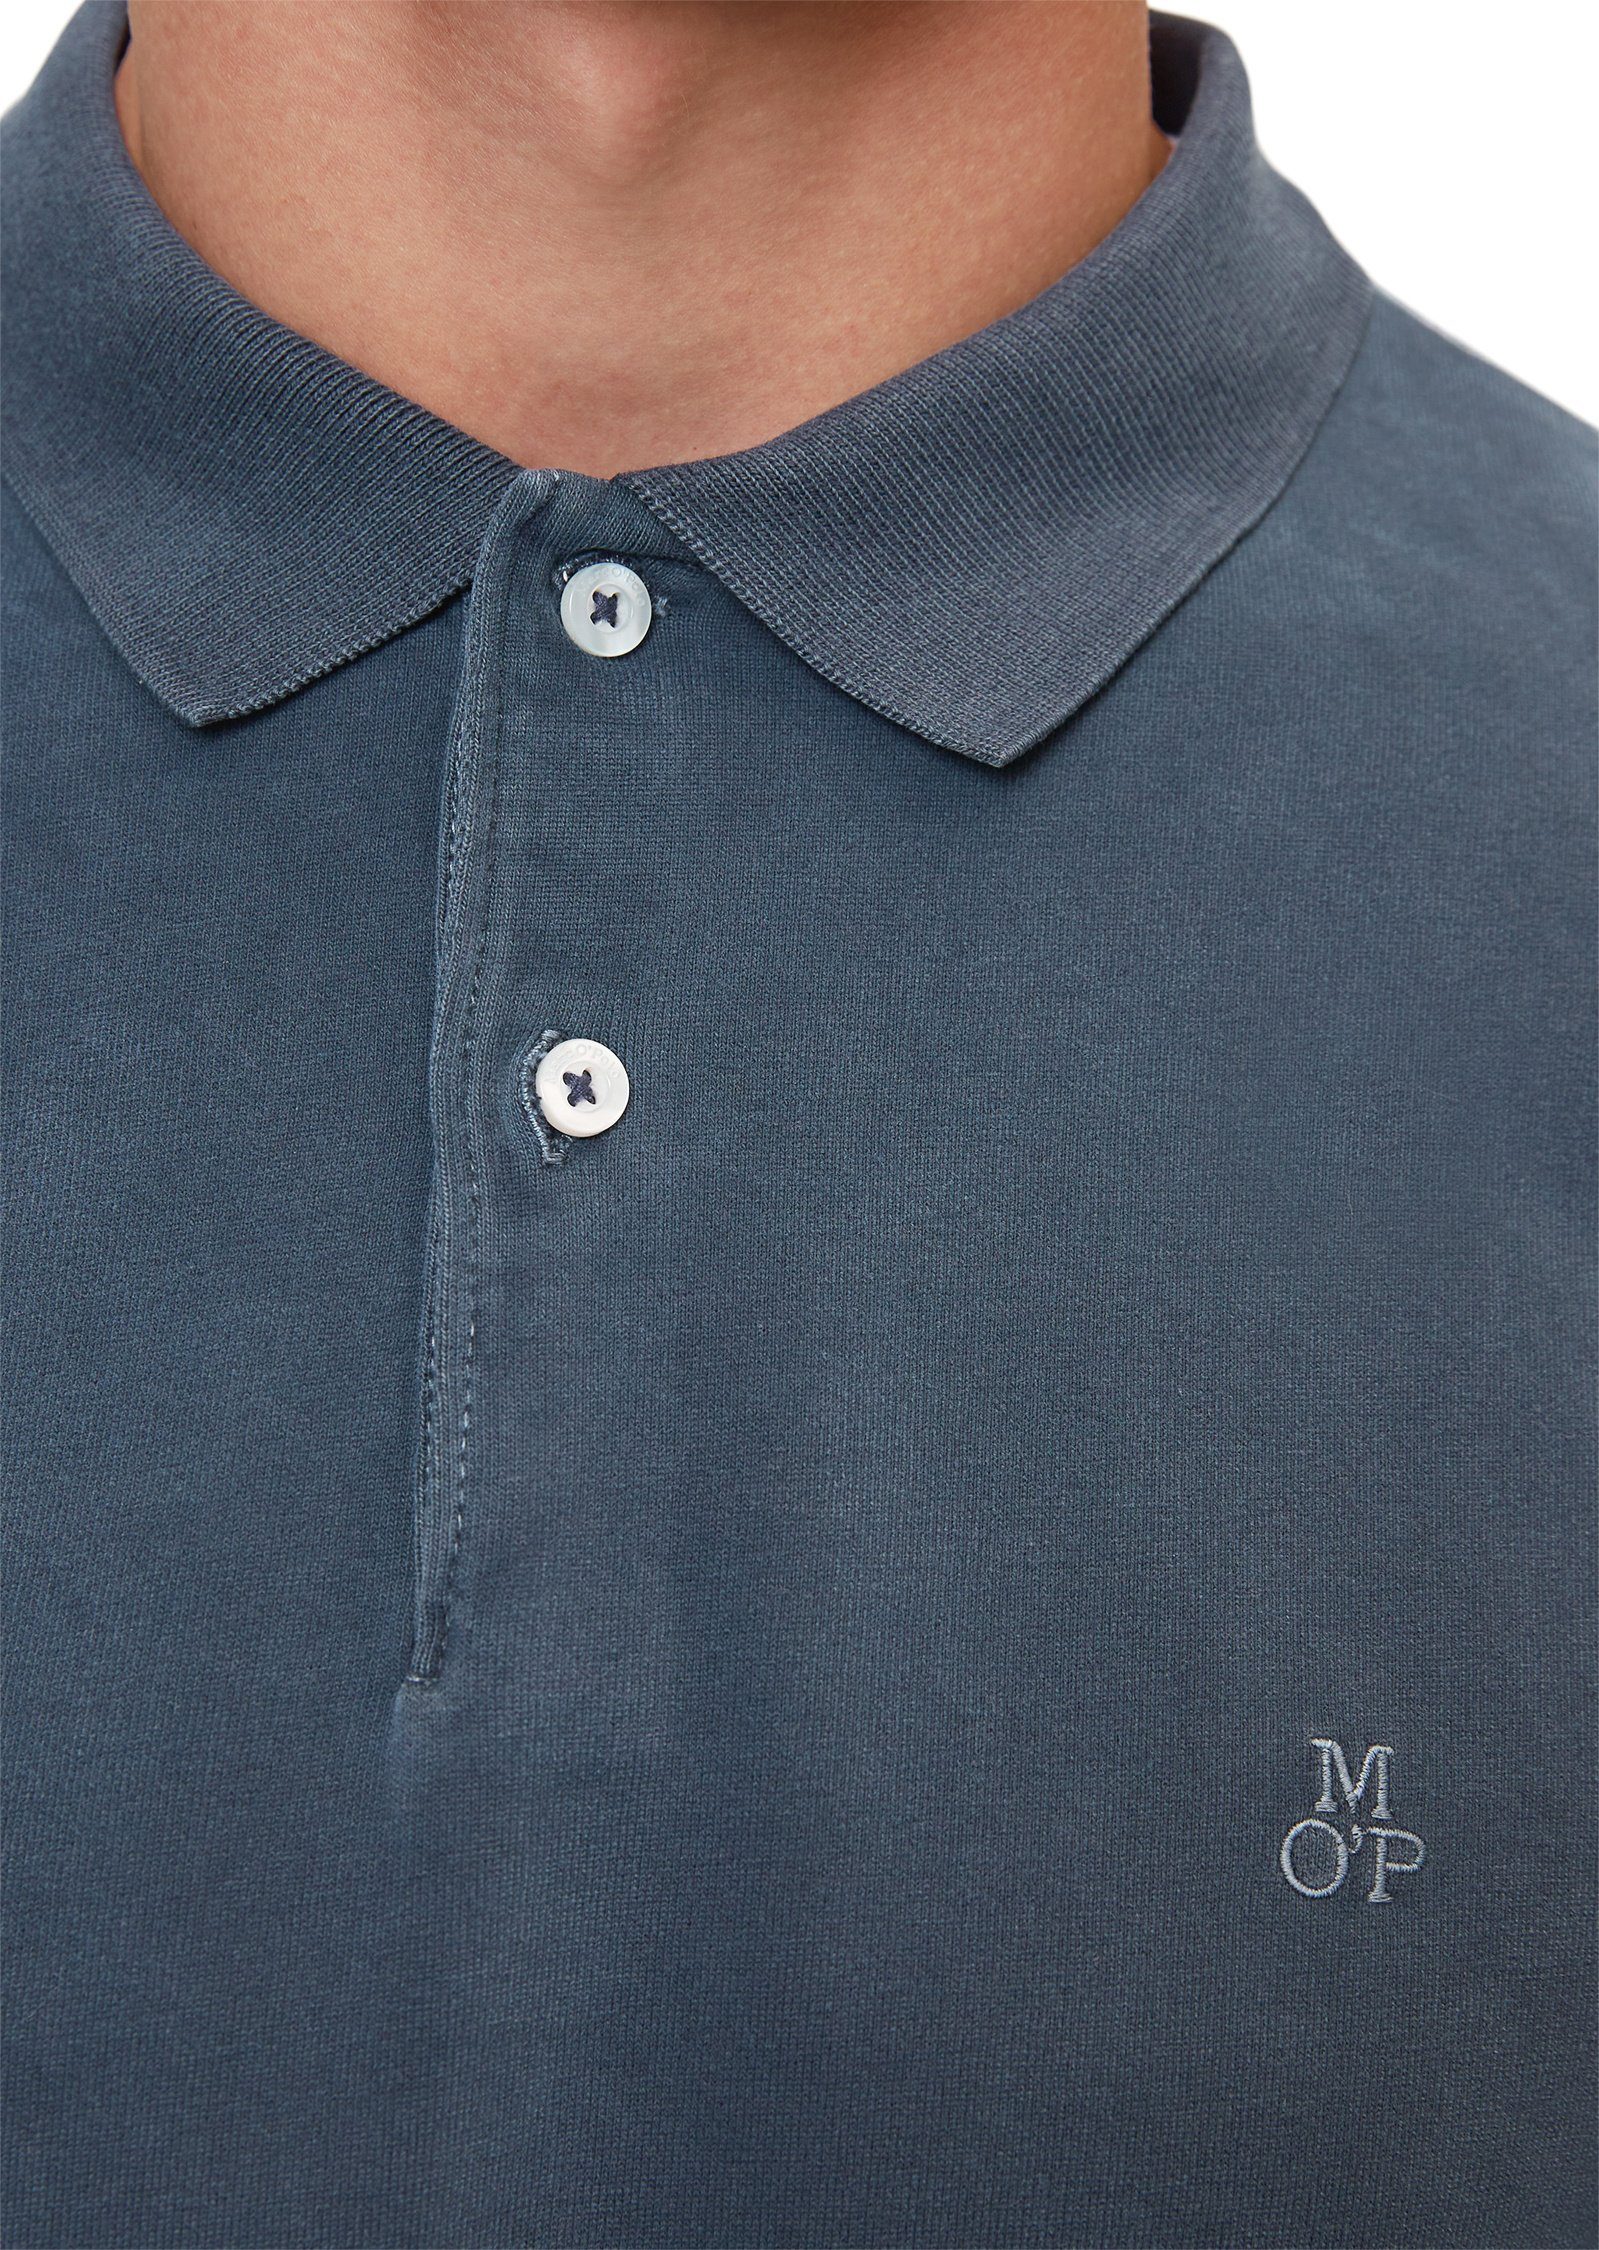 Marc O'Polo Bio-Baumwolle Langarm-Poloshirt blau reiner aus